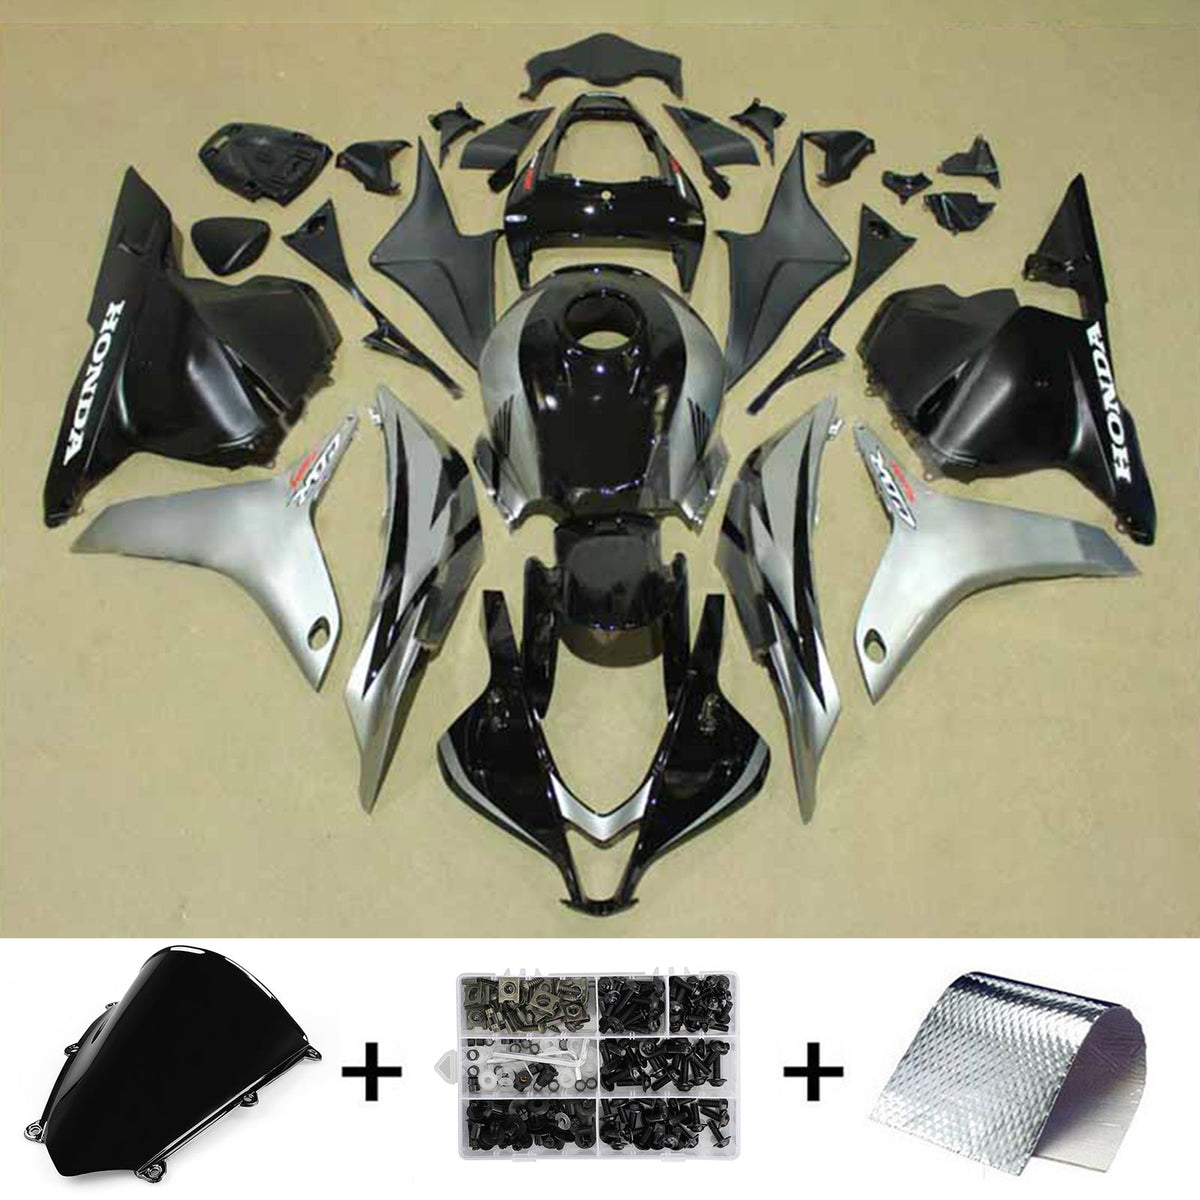 Kit carena Amotopart 2009-2012 Honda CBR600RR nero grigio